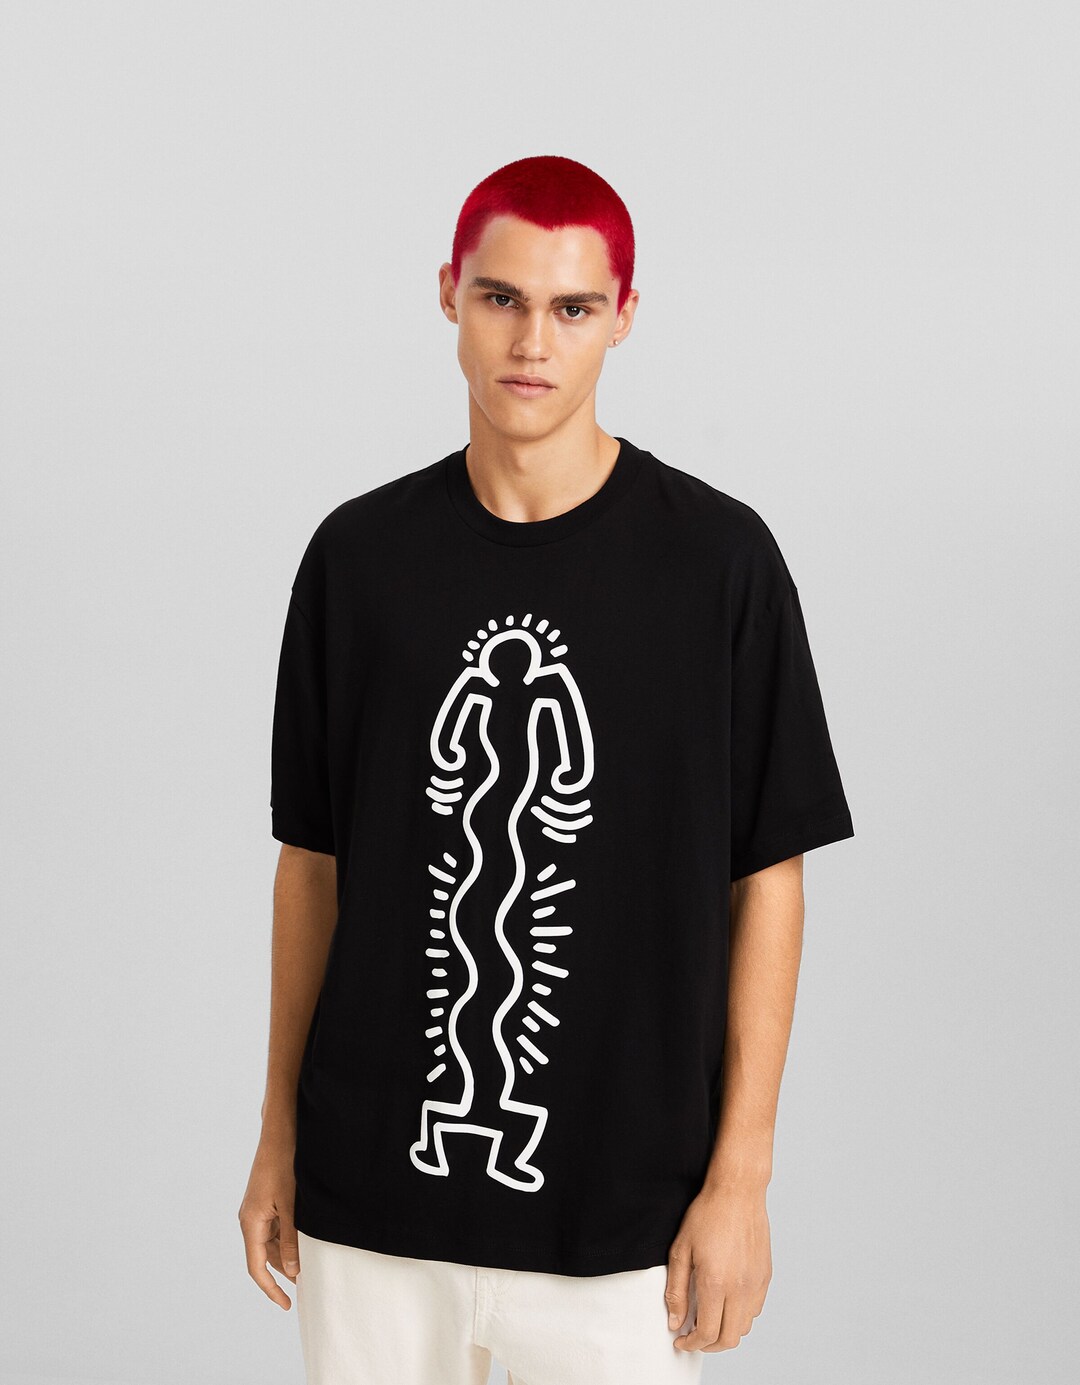 Camiseta Keith Haring manga corta boxy fit print